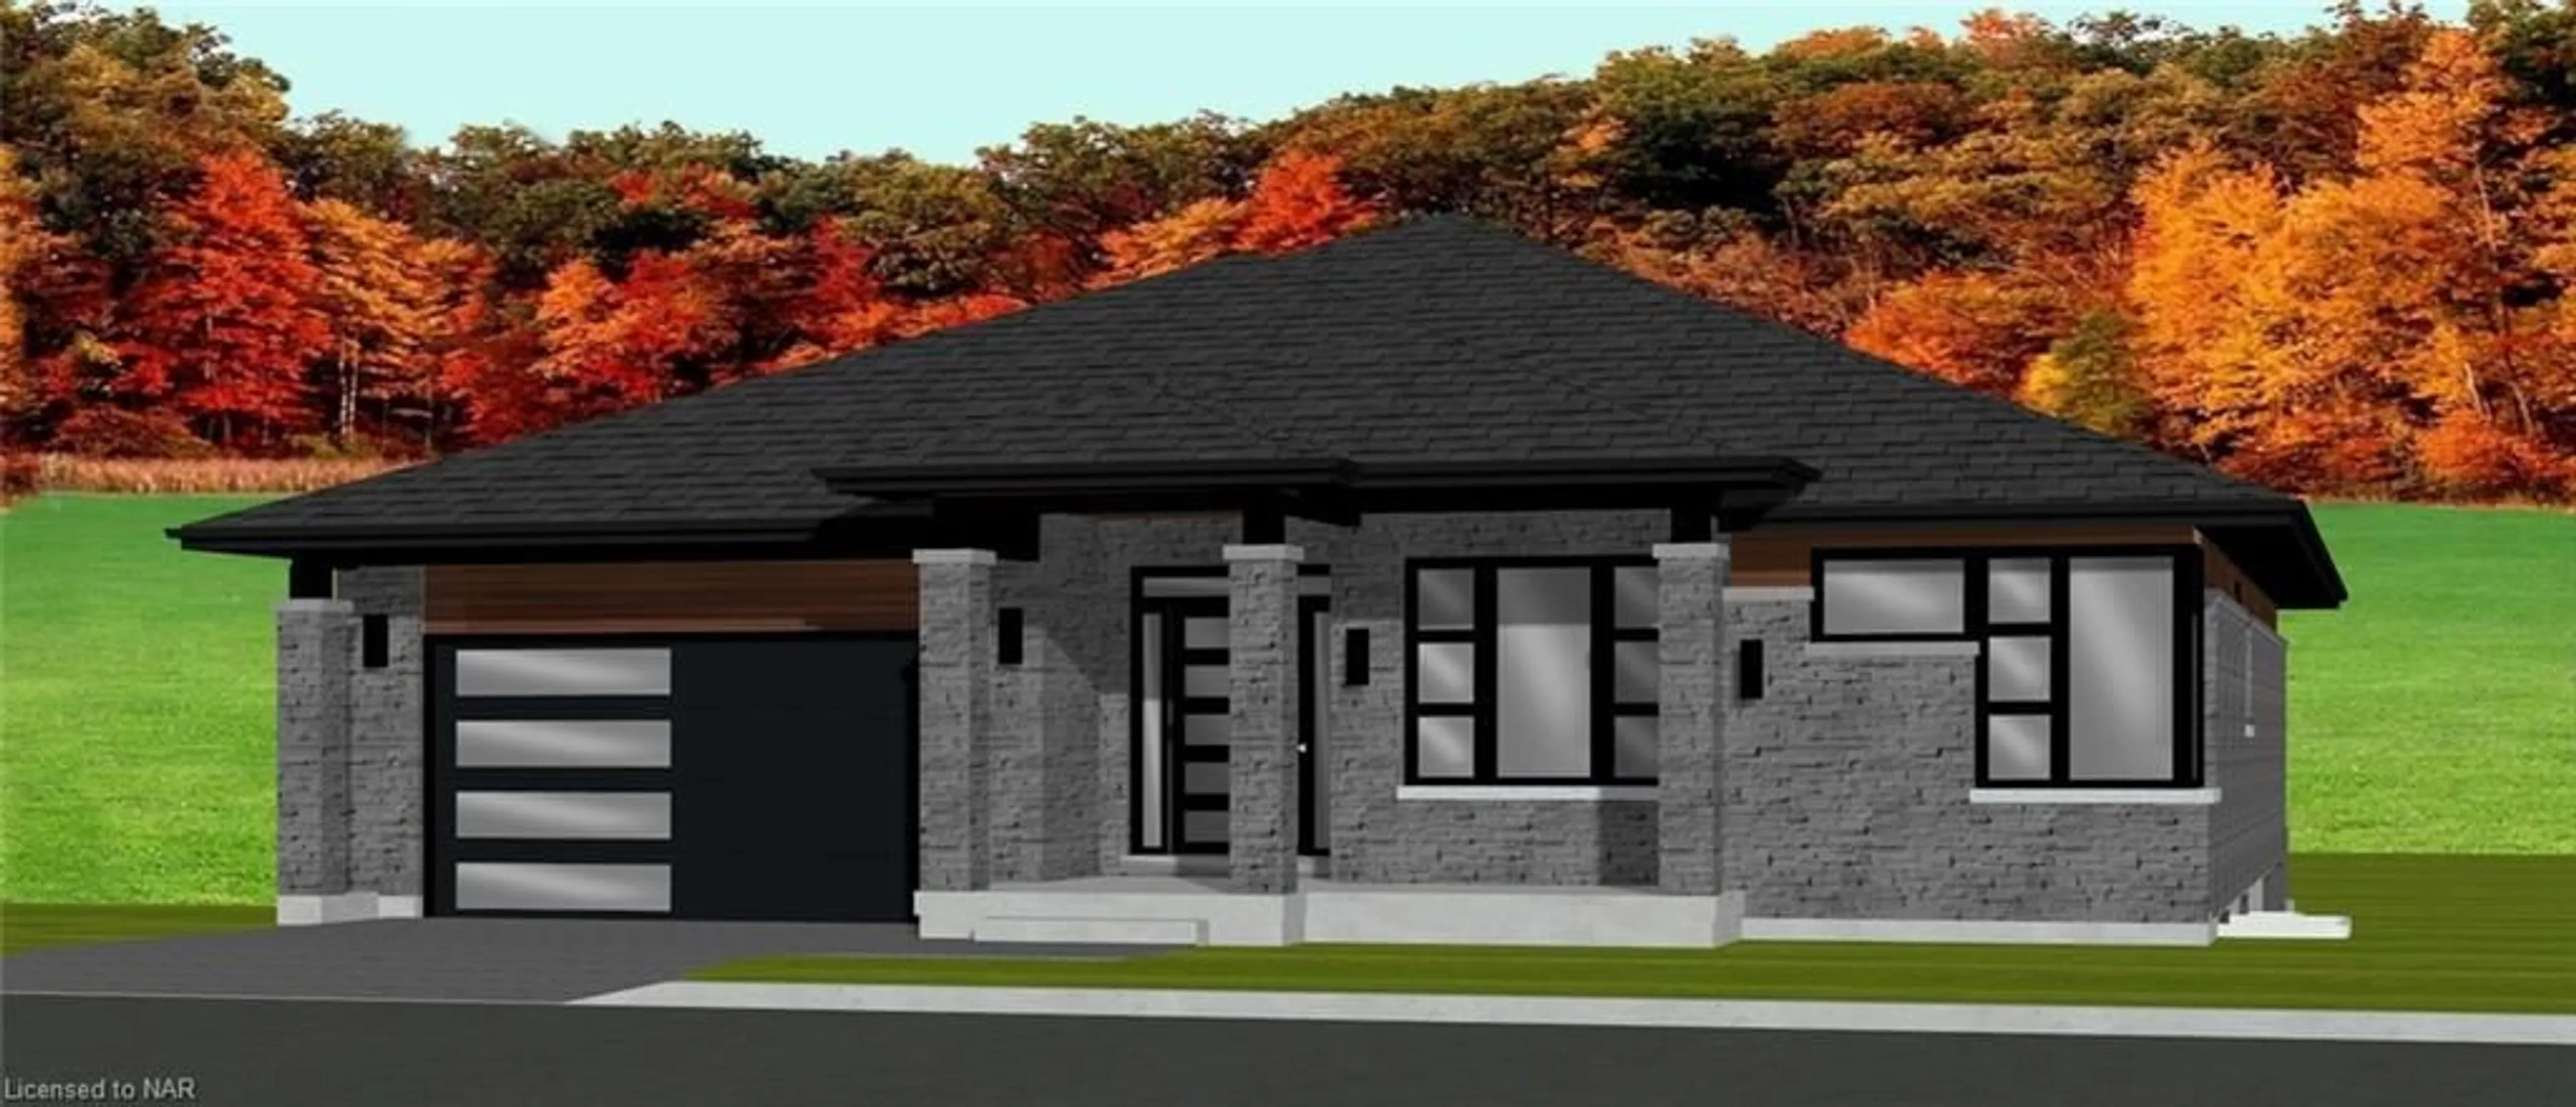 Frontside or backside of a home for 3642 Vosburgh Pl, Campden Ontario L0R 1G0